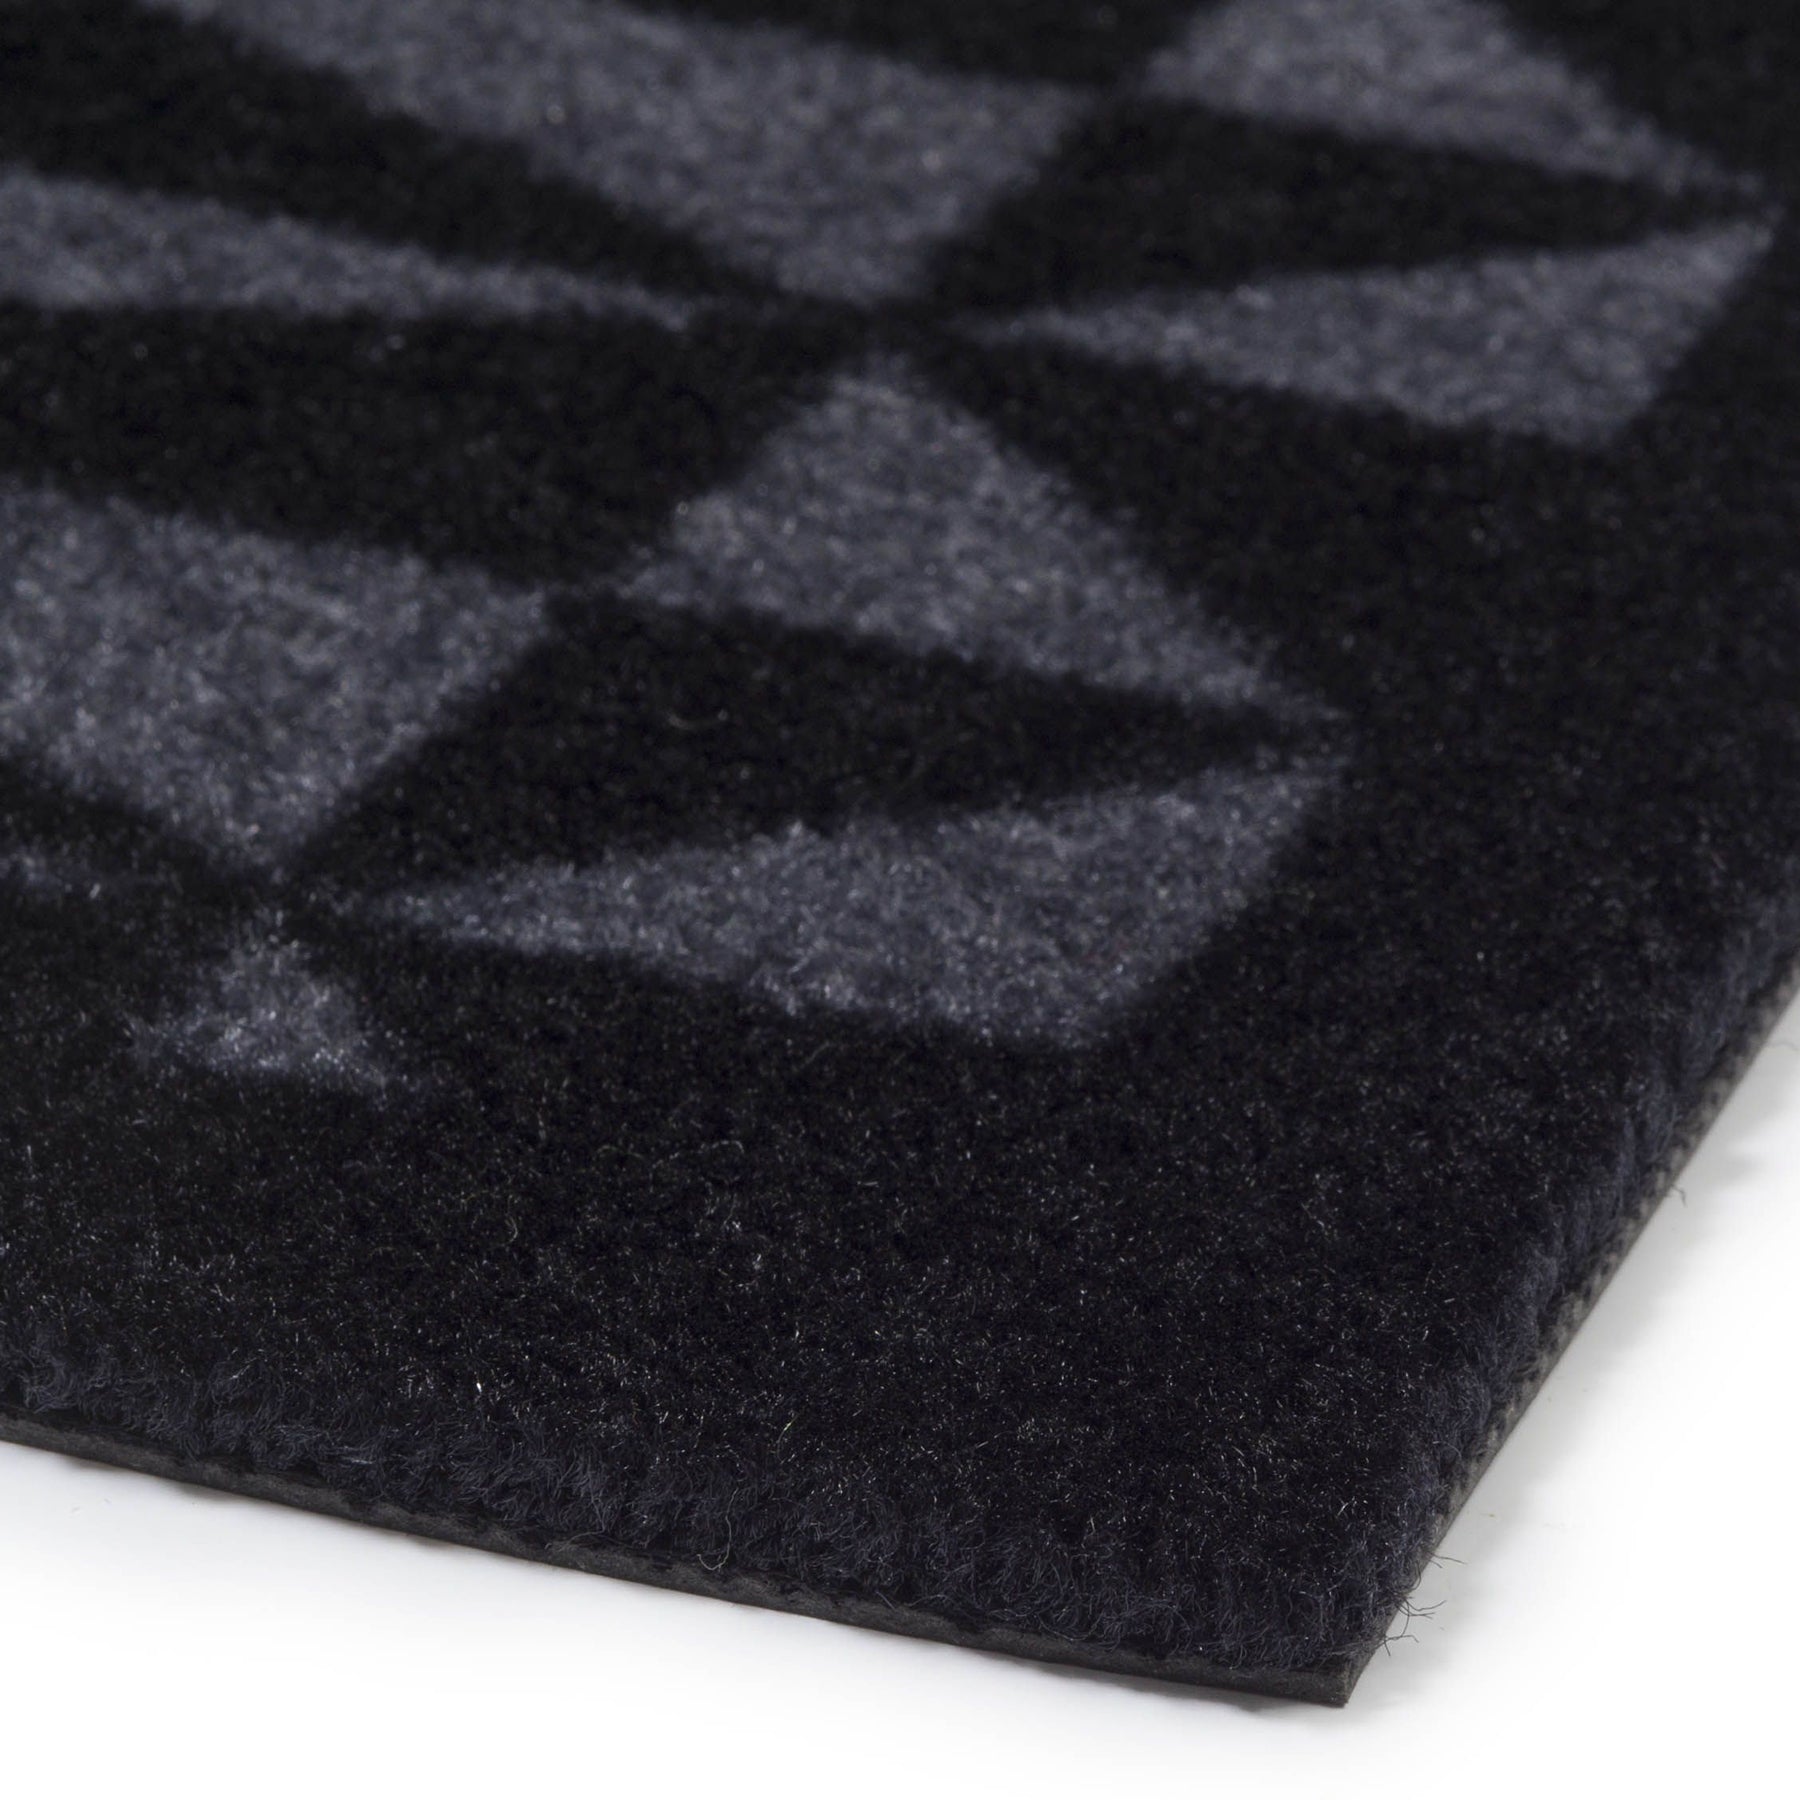 Floor mat 60 x 90 cm - Graphic/Black Gray